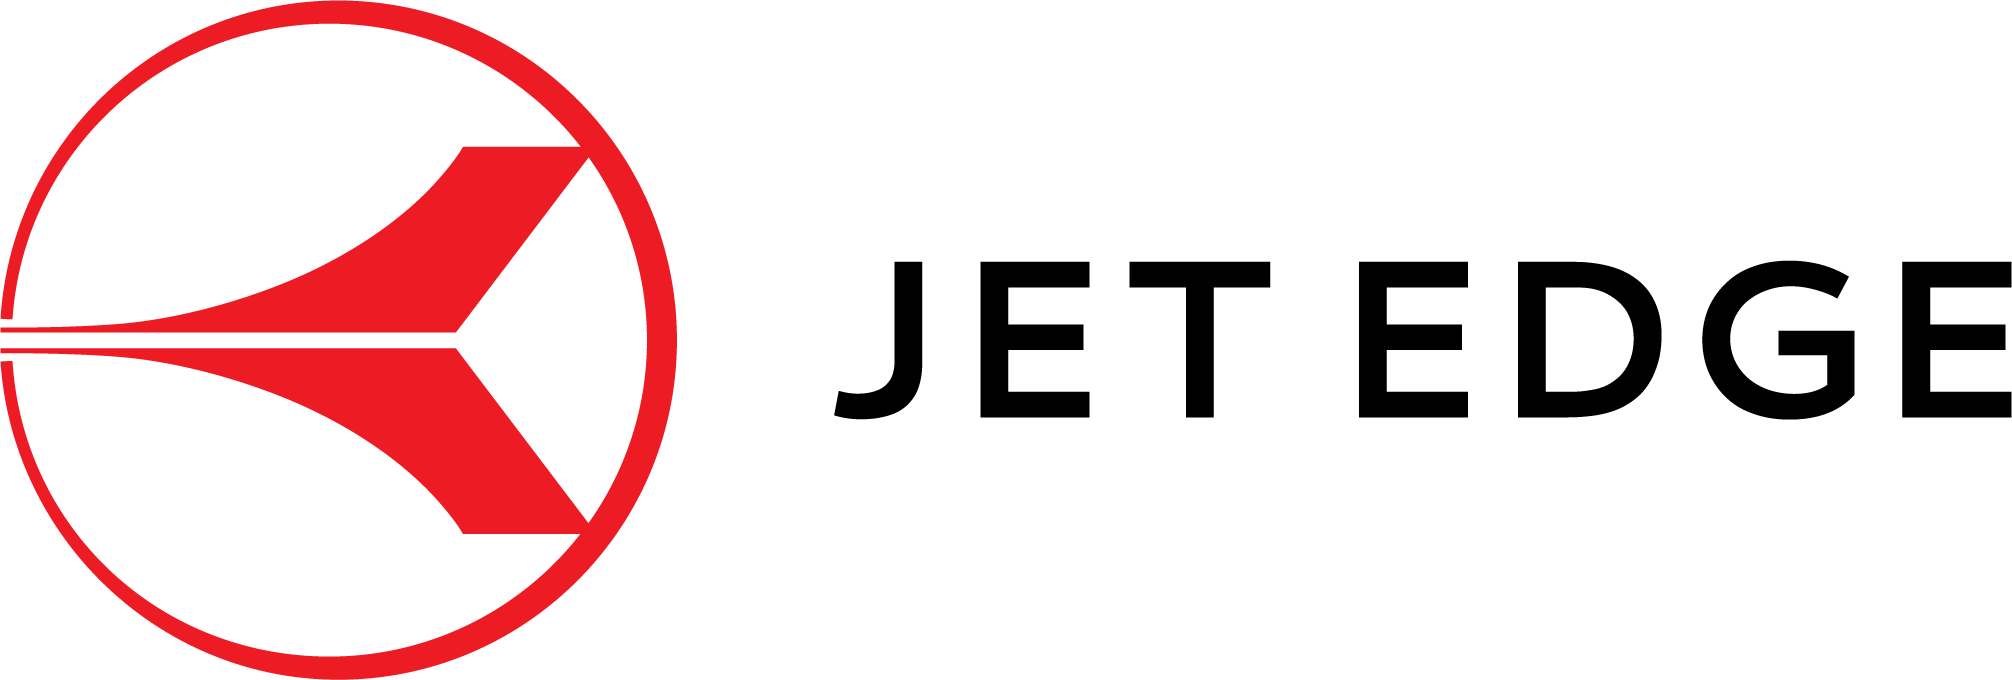 jet-edge-logo-dark.png